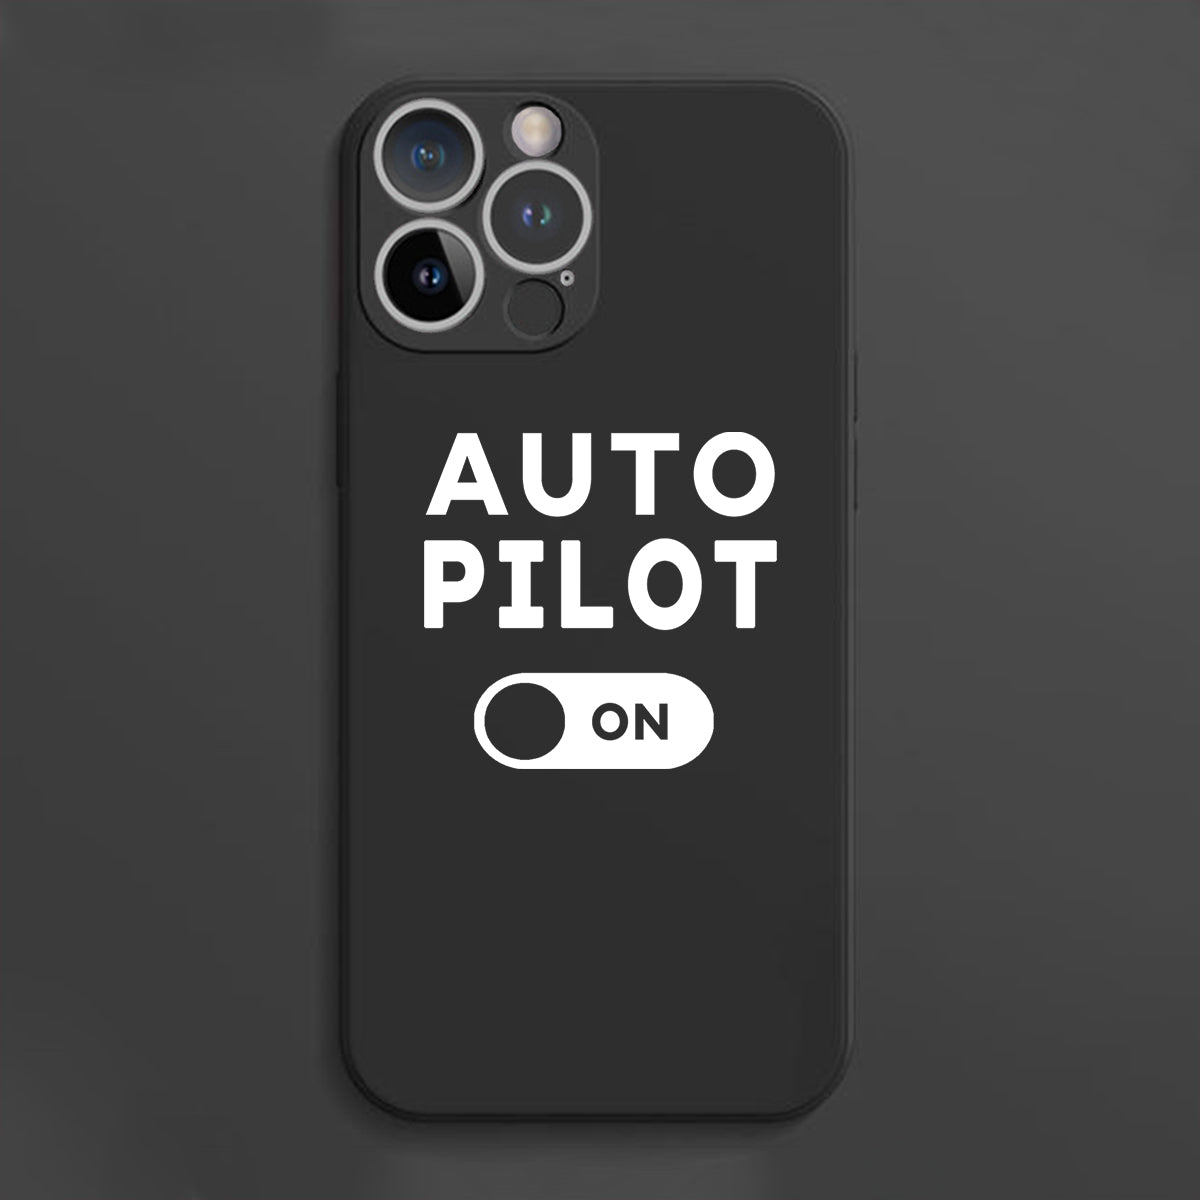 Auto Pilot ON Designed Soft Silicone iPhone Cases